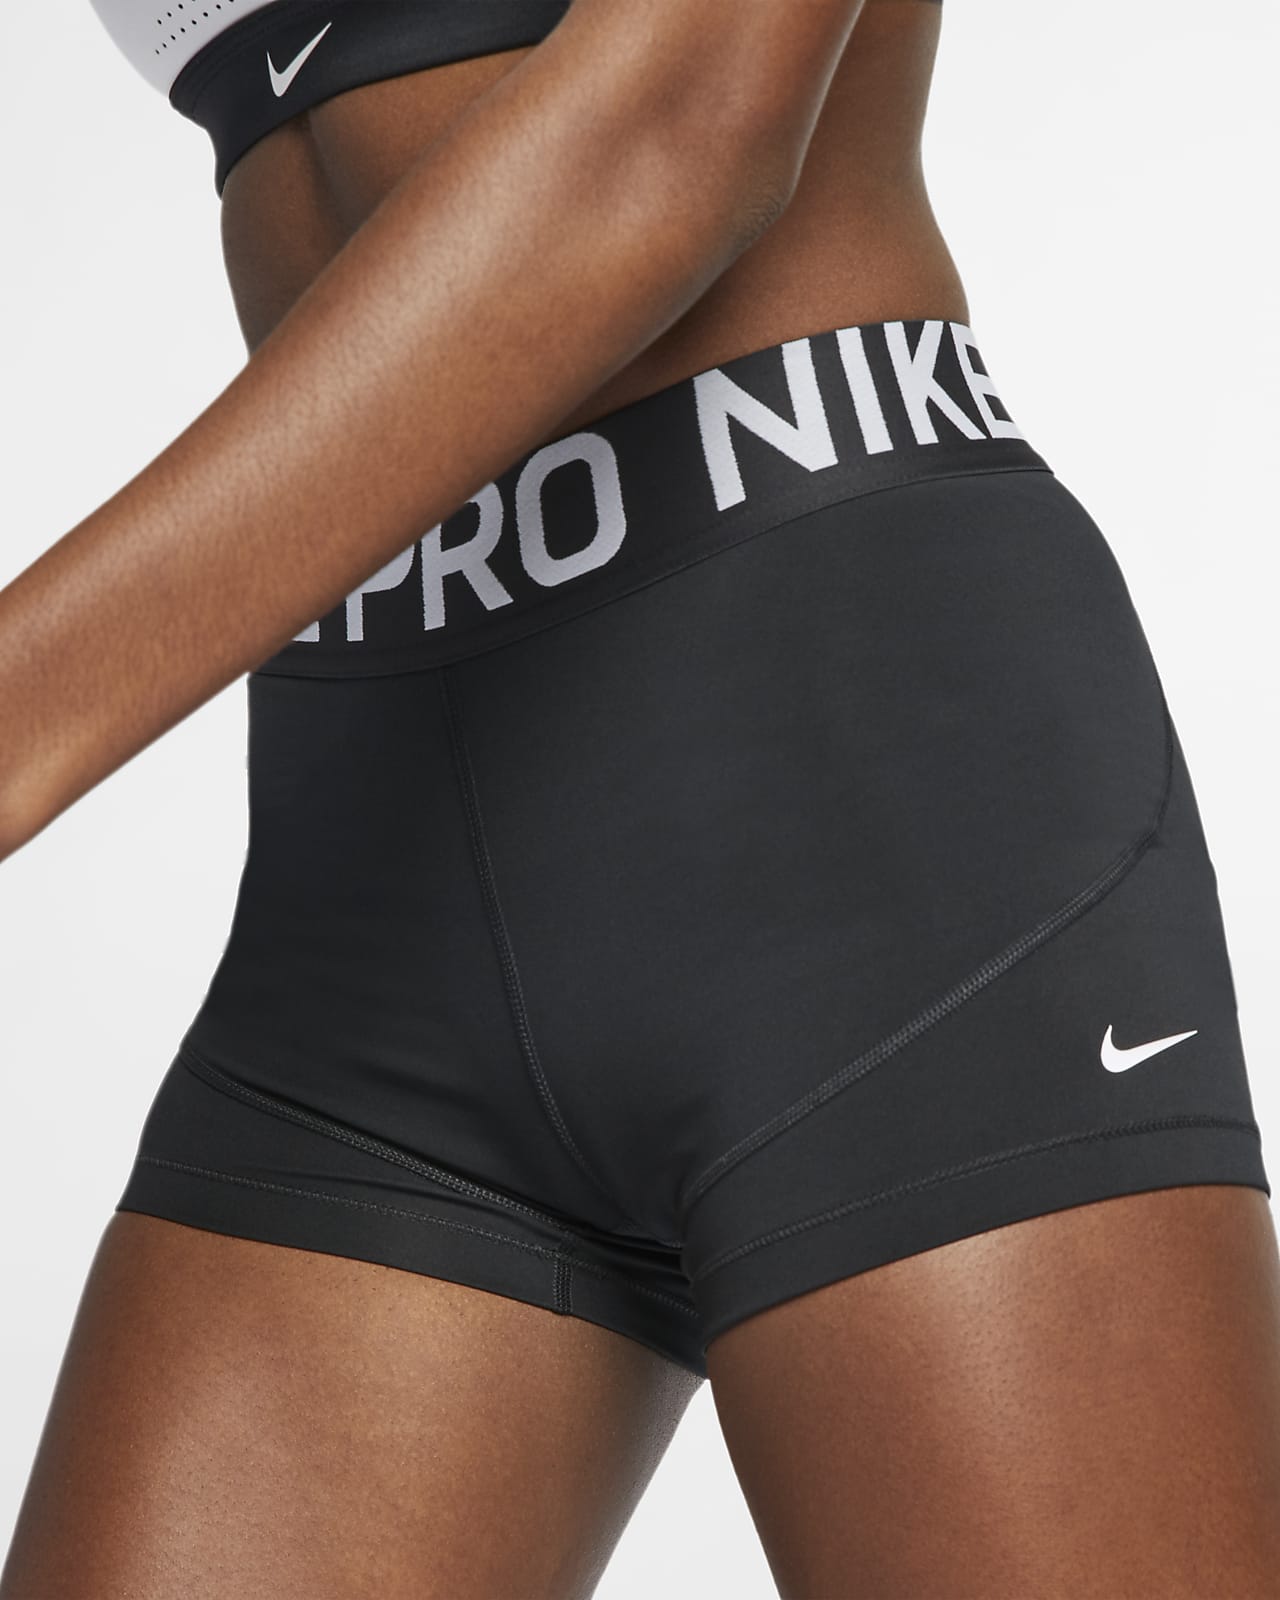 nike pro shorts women's high waist